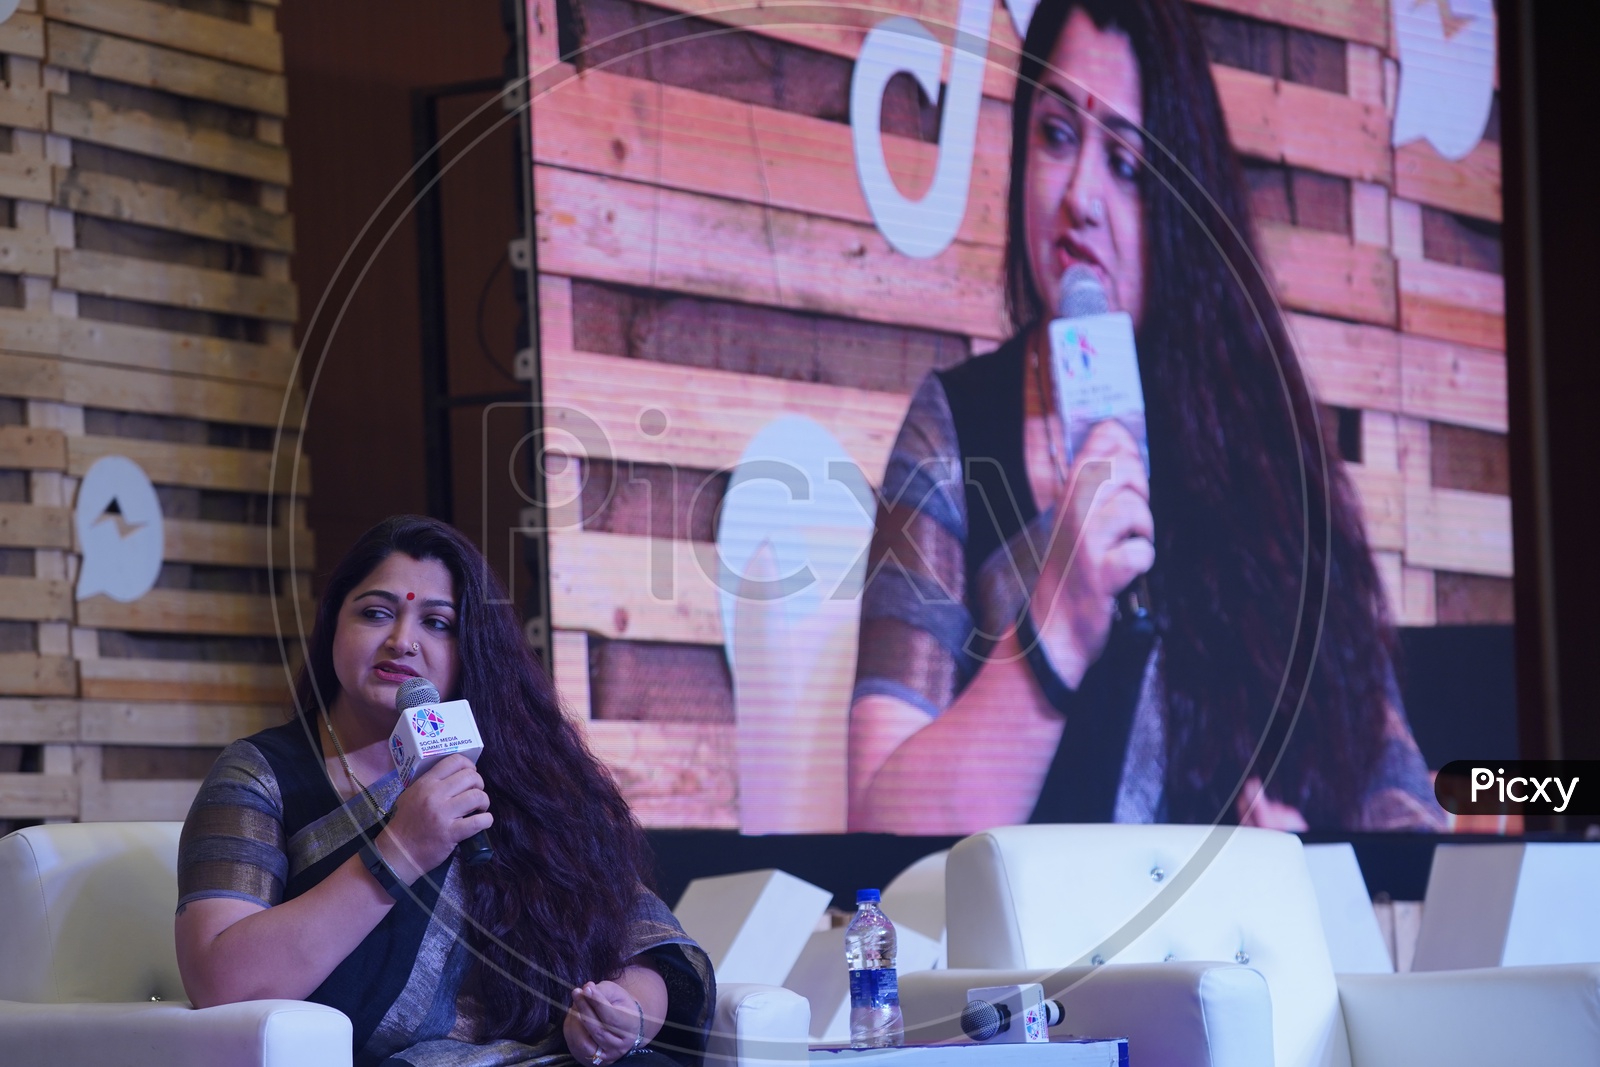 South Indian Film Actress Kushboo Sundar in Social Media Summit & Awards Amaravati 2018